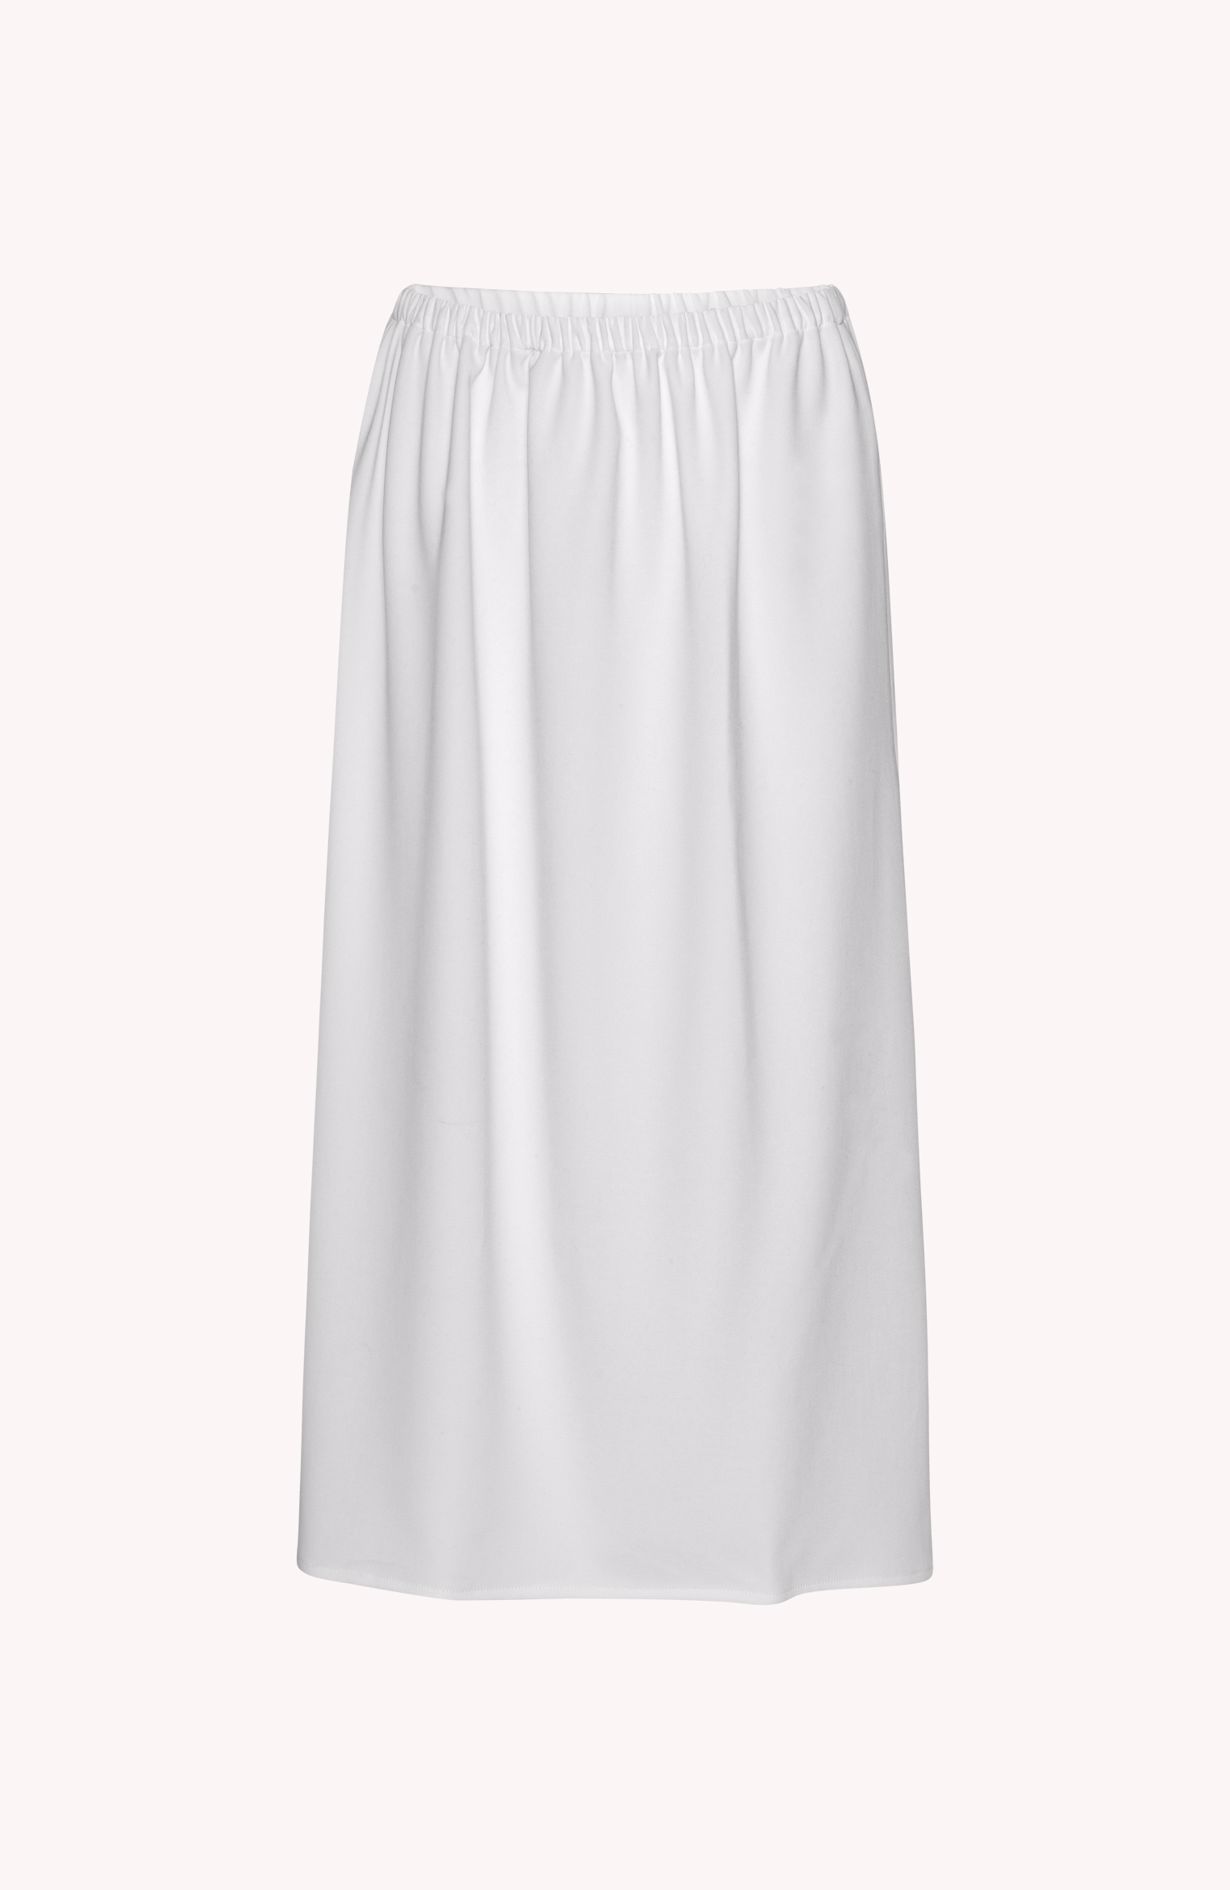 Iblamelulu Kaya skirt white